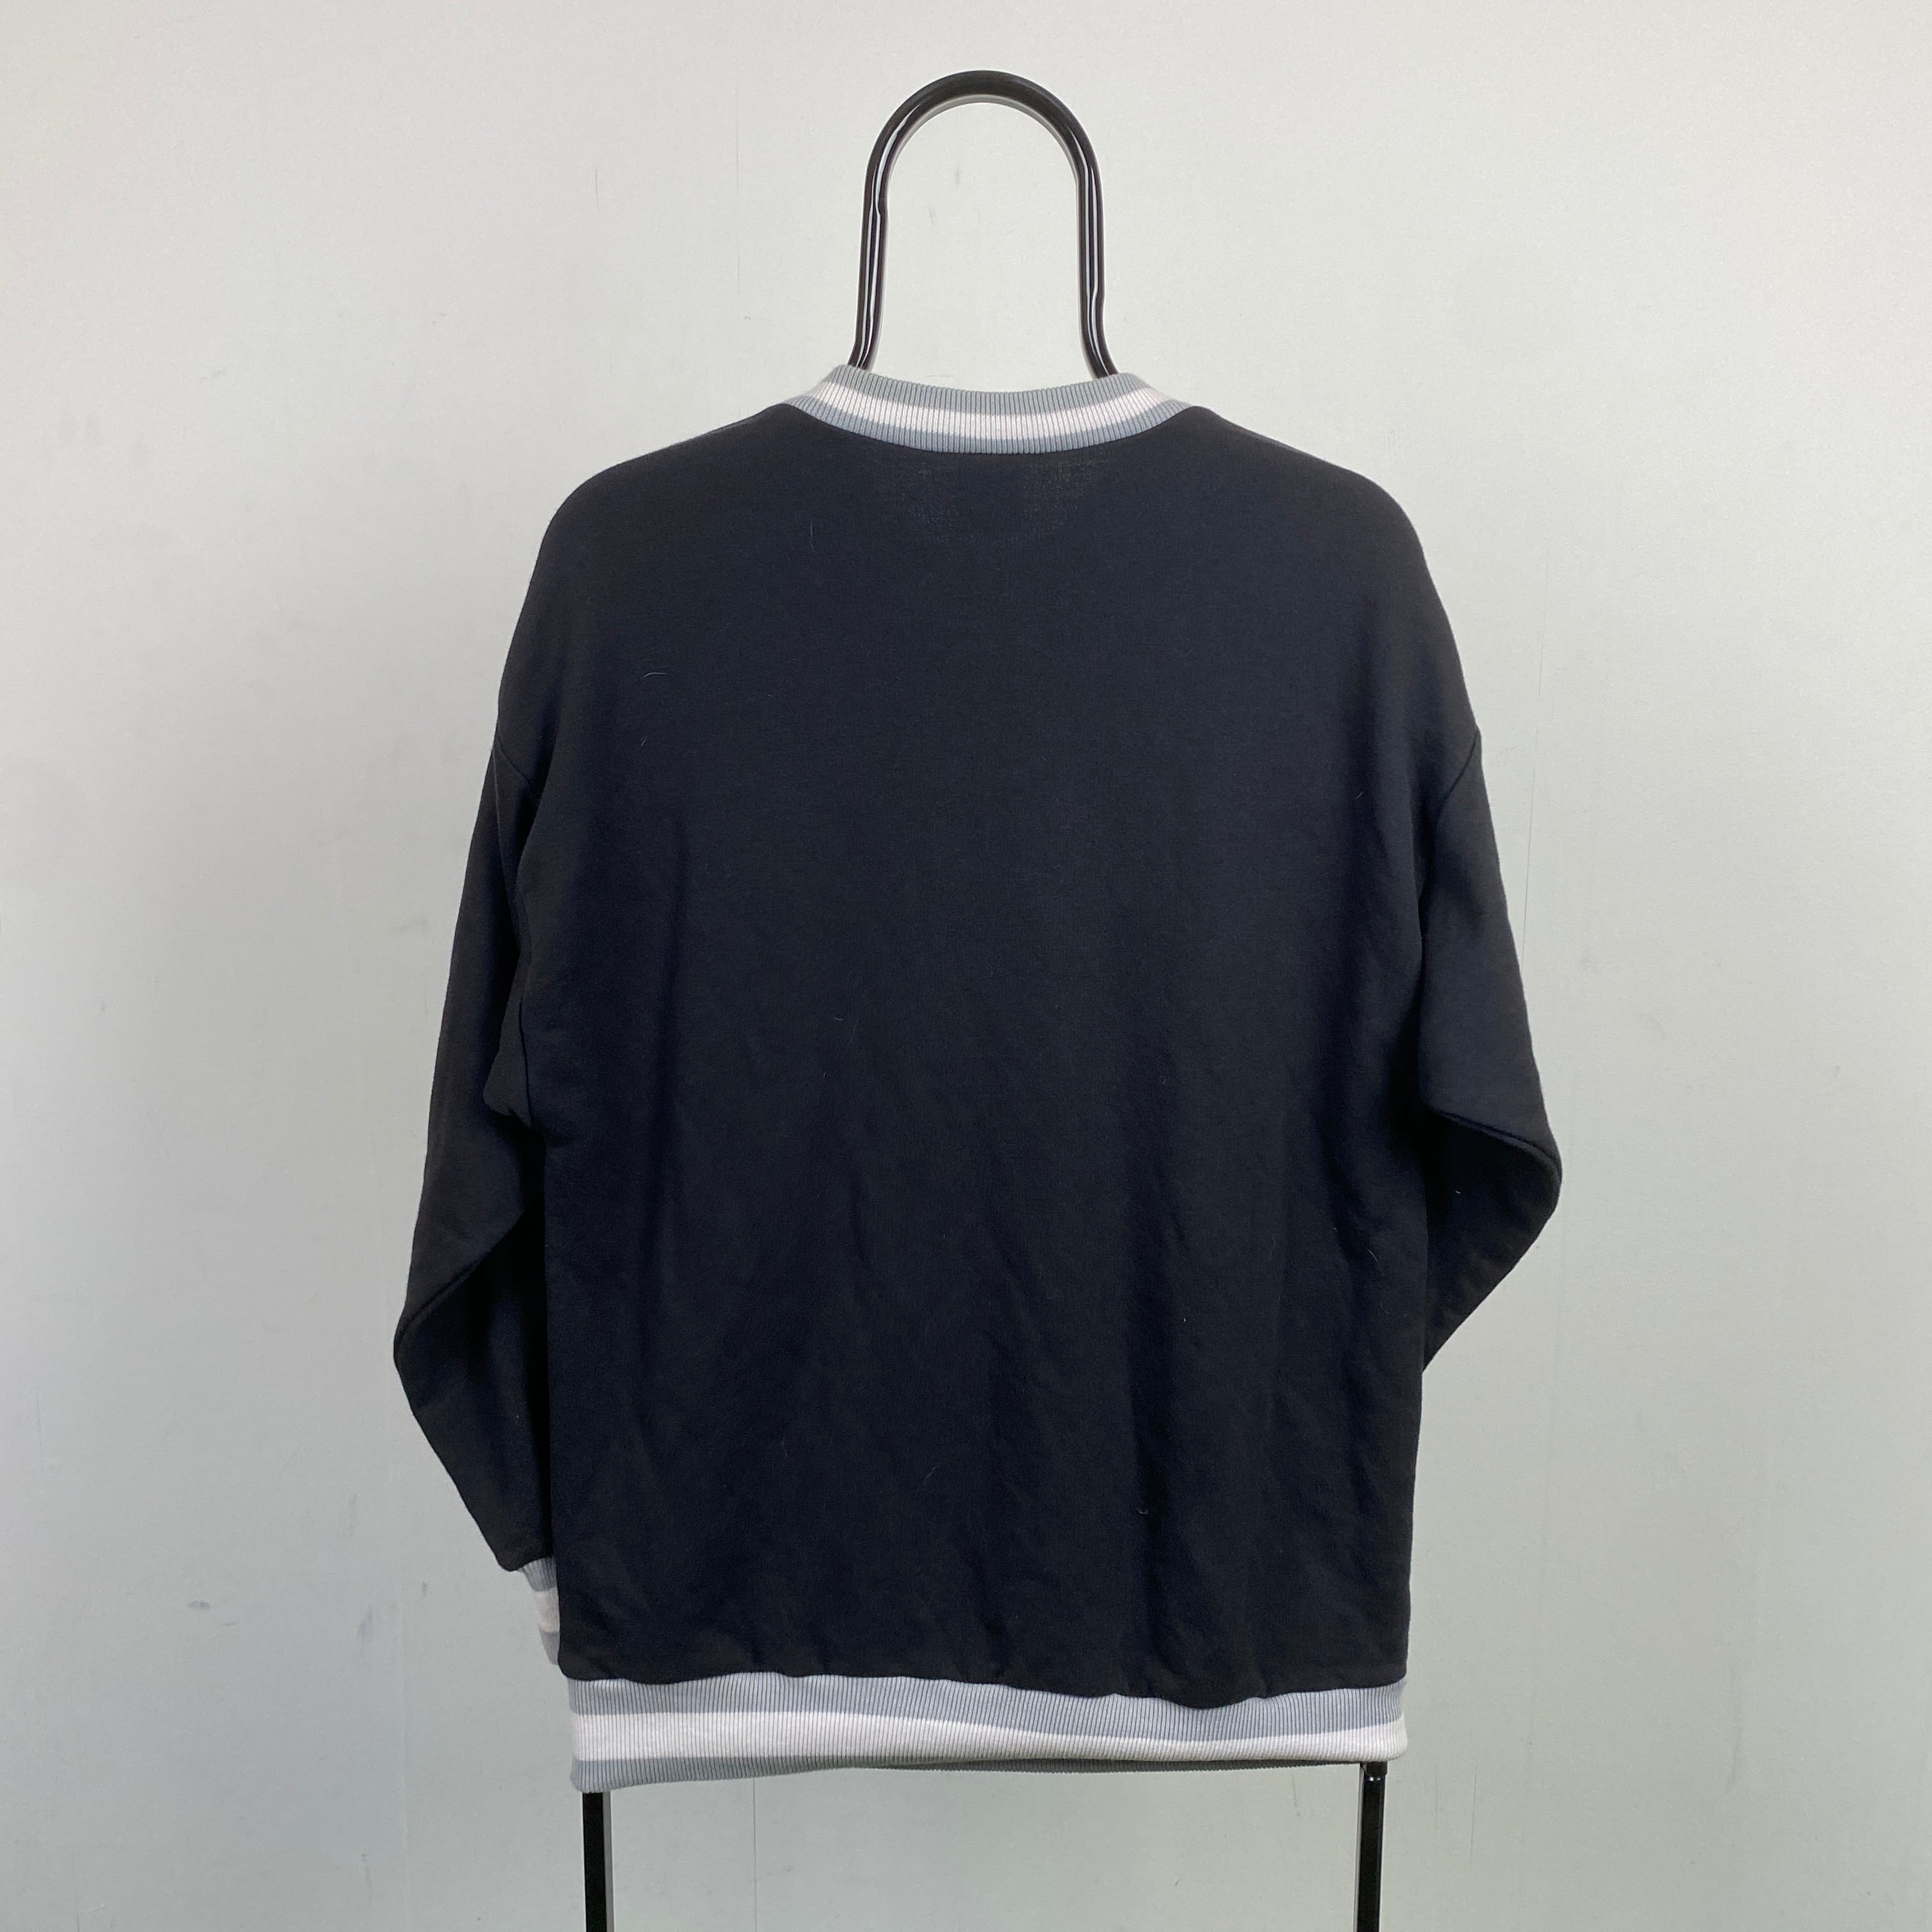 90s Adidas Sweatshirt Black Small